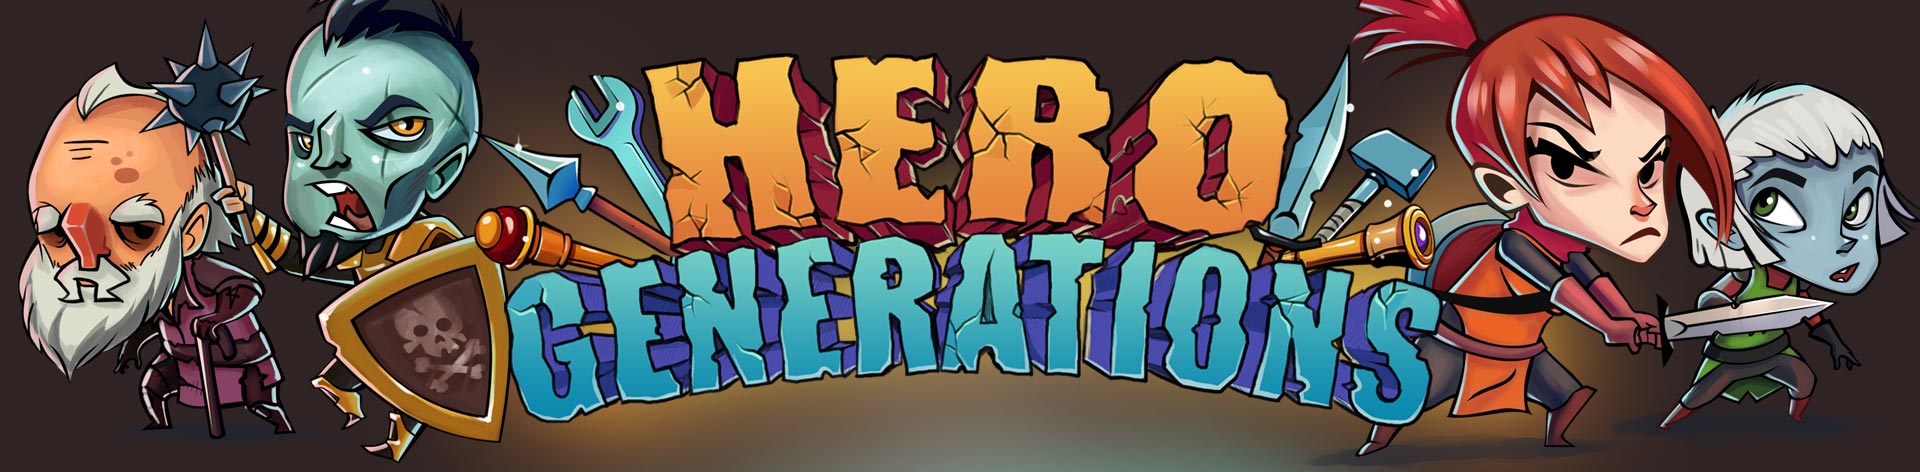 Hero Generations Banner Image